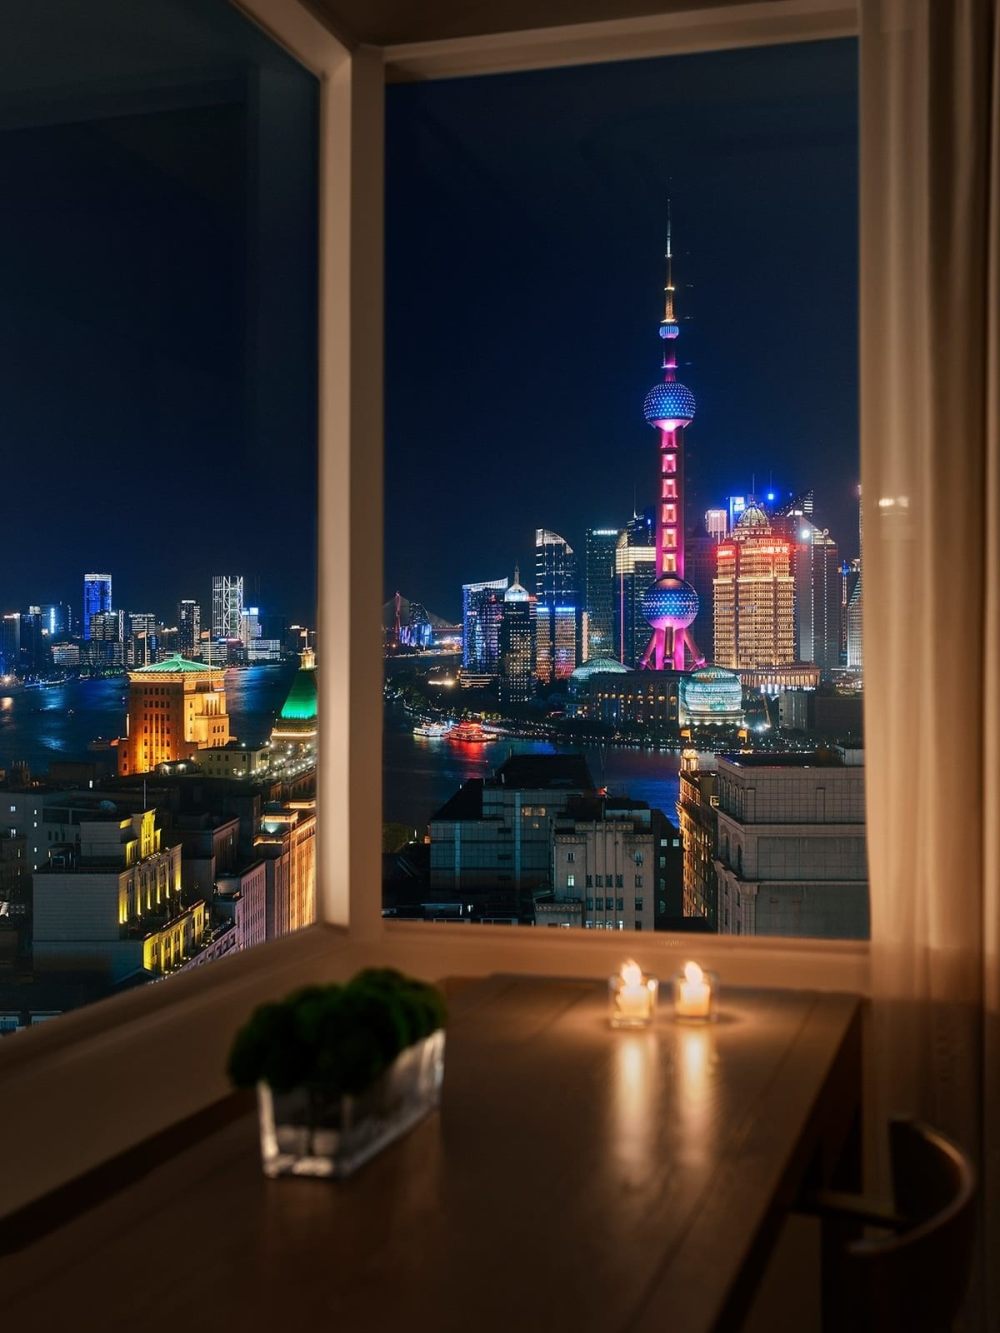 上海艾迪逊酒店 The Shanghai EDITION_Premium-Bund-View-Room_1602_PBNK_View-e1579725082312.jpg